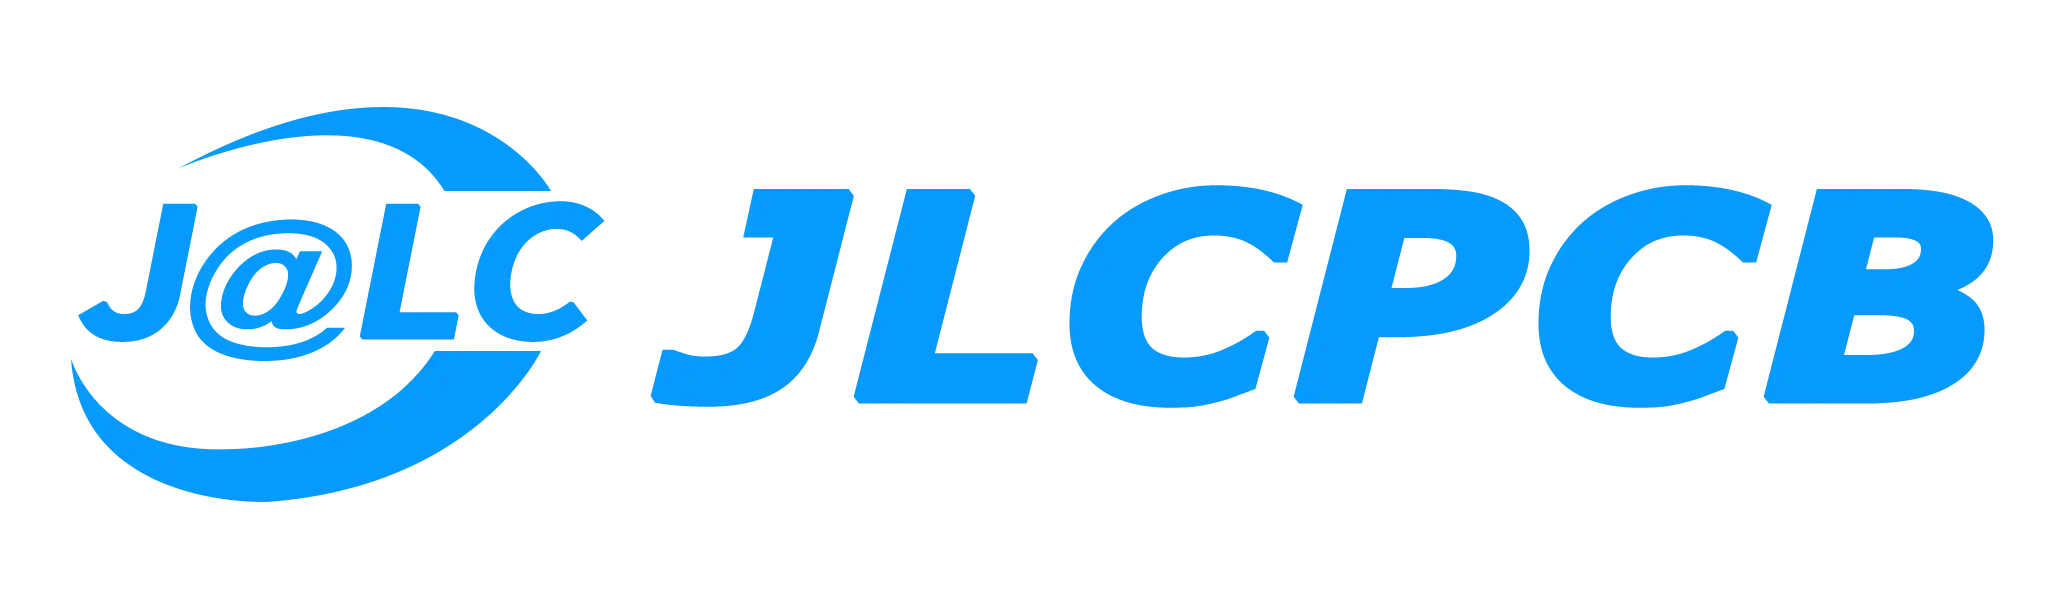 JLCPCB Logo